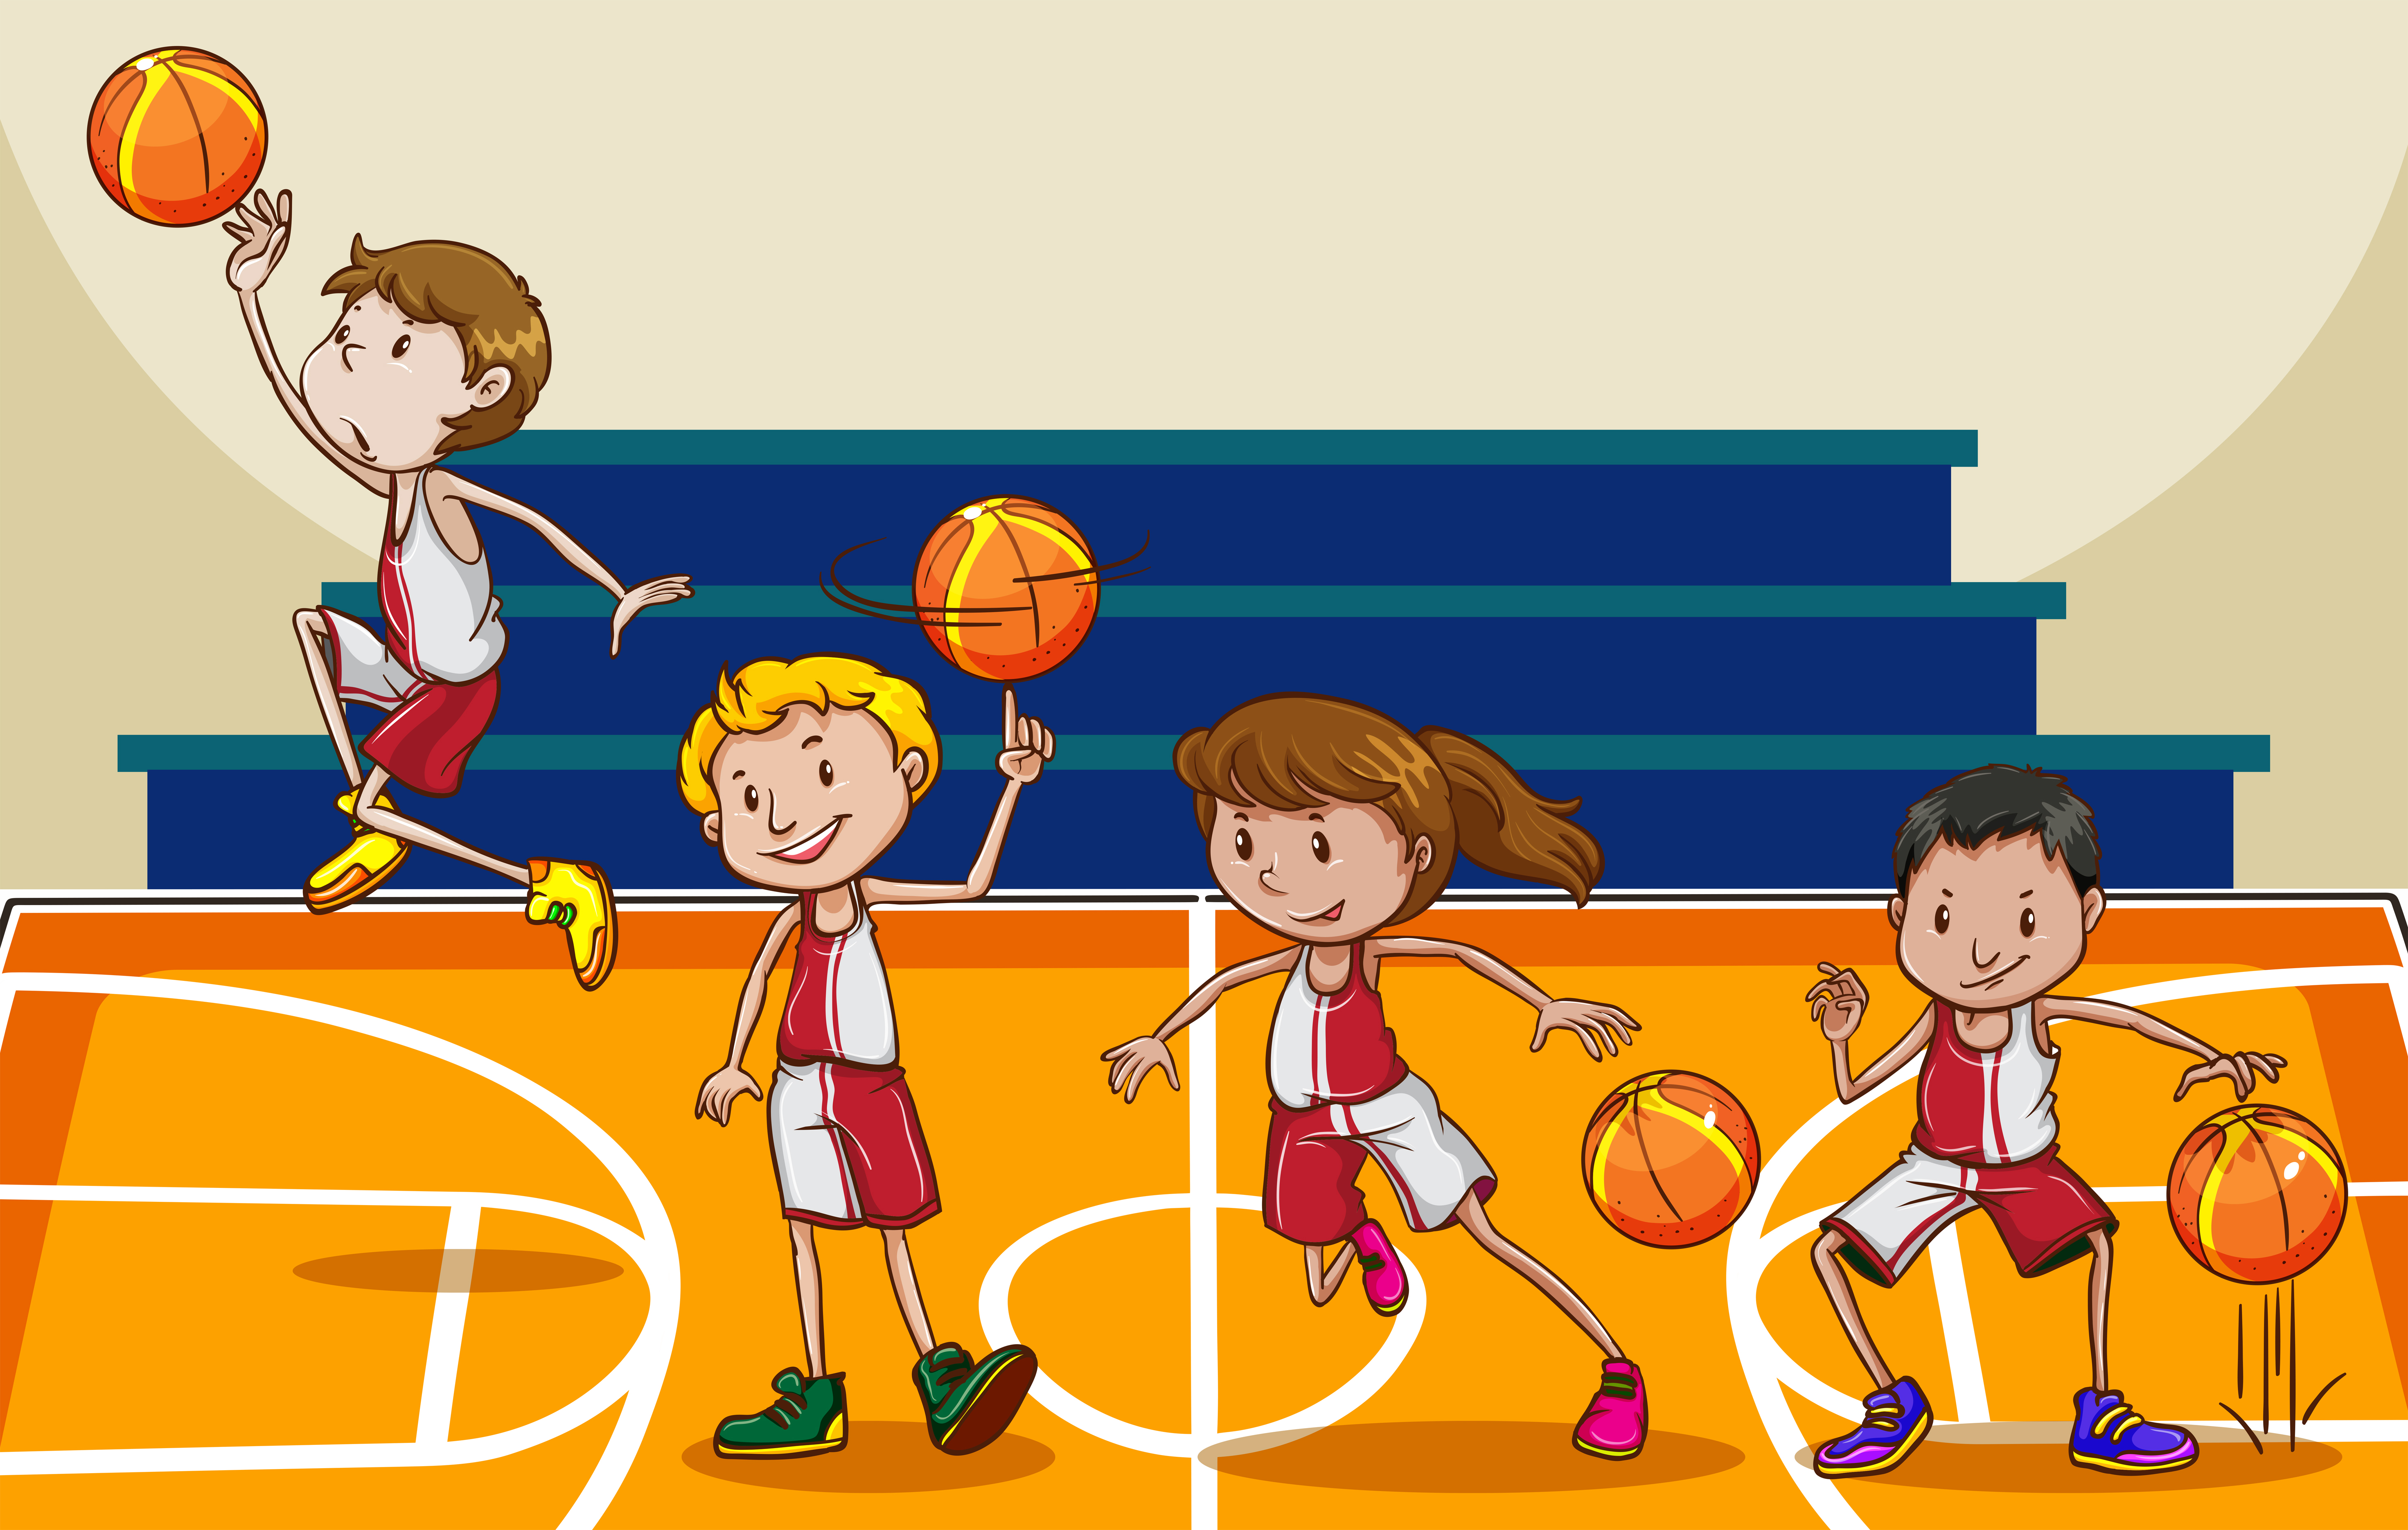 Баскетбол для дошкольников